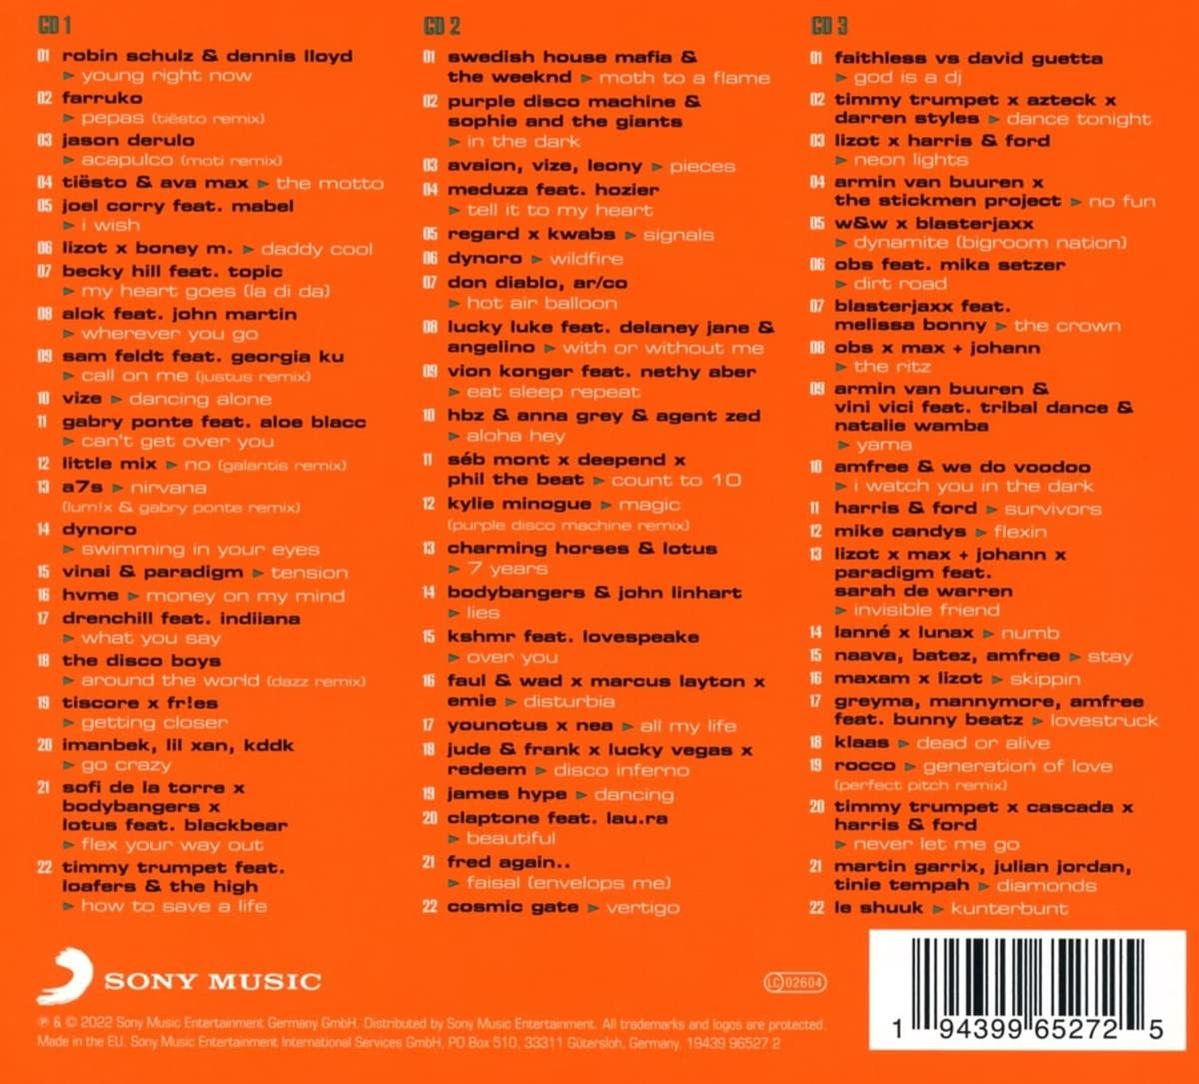 VARIOUS - Club Sounds - (CD) Vol.98